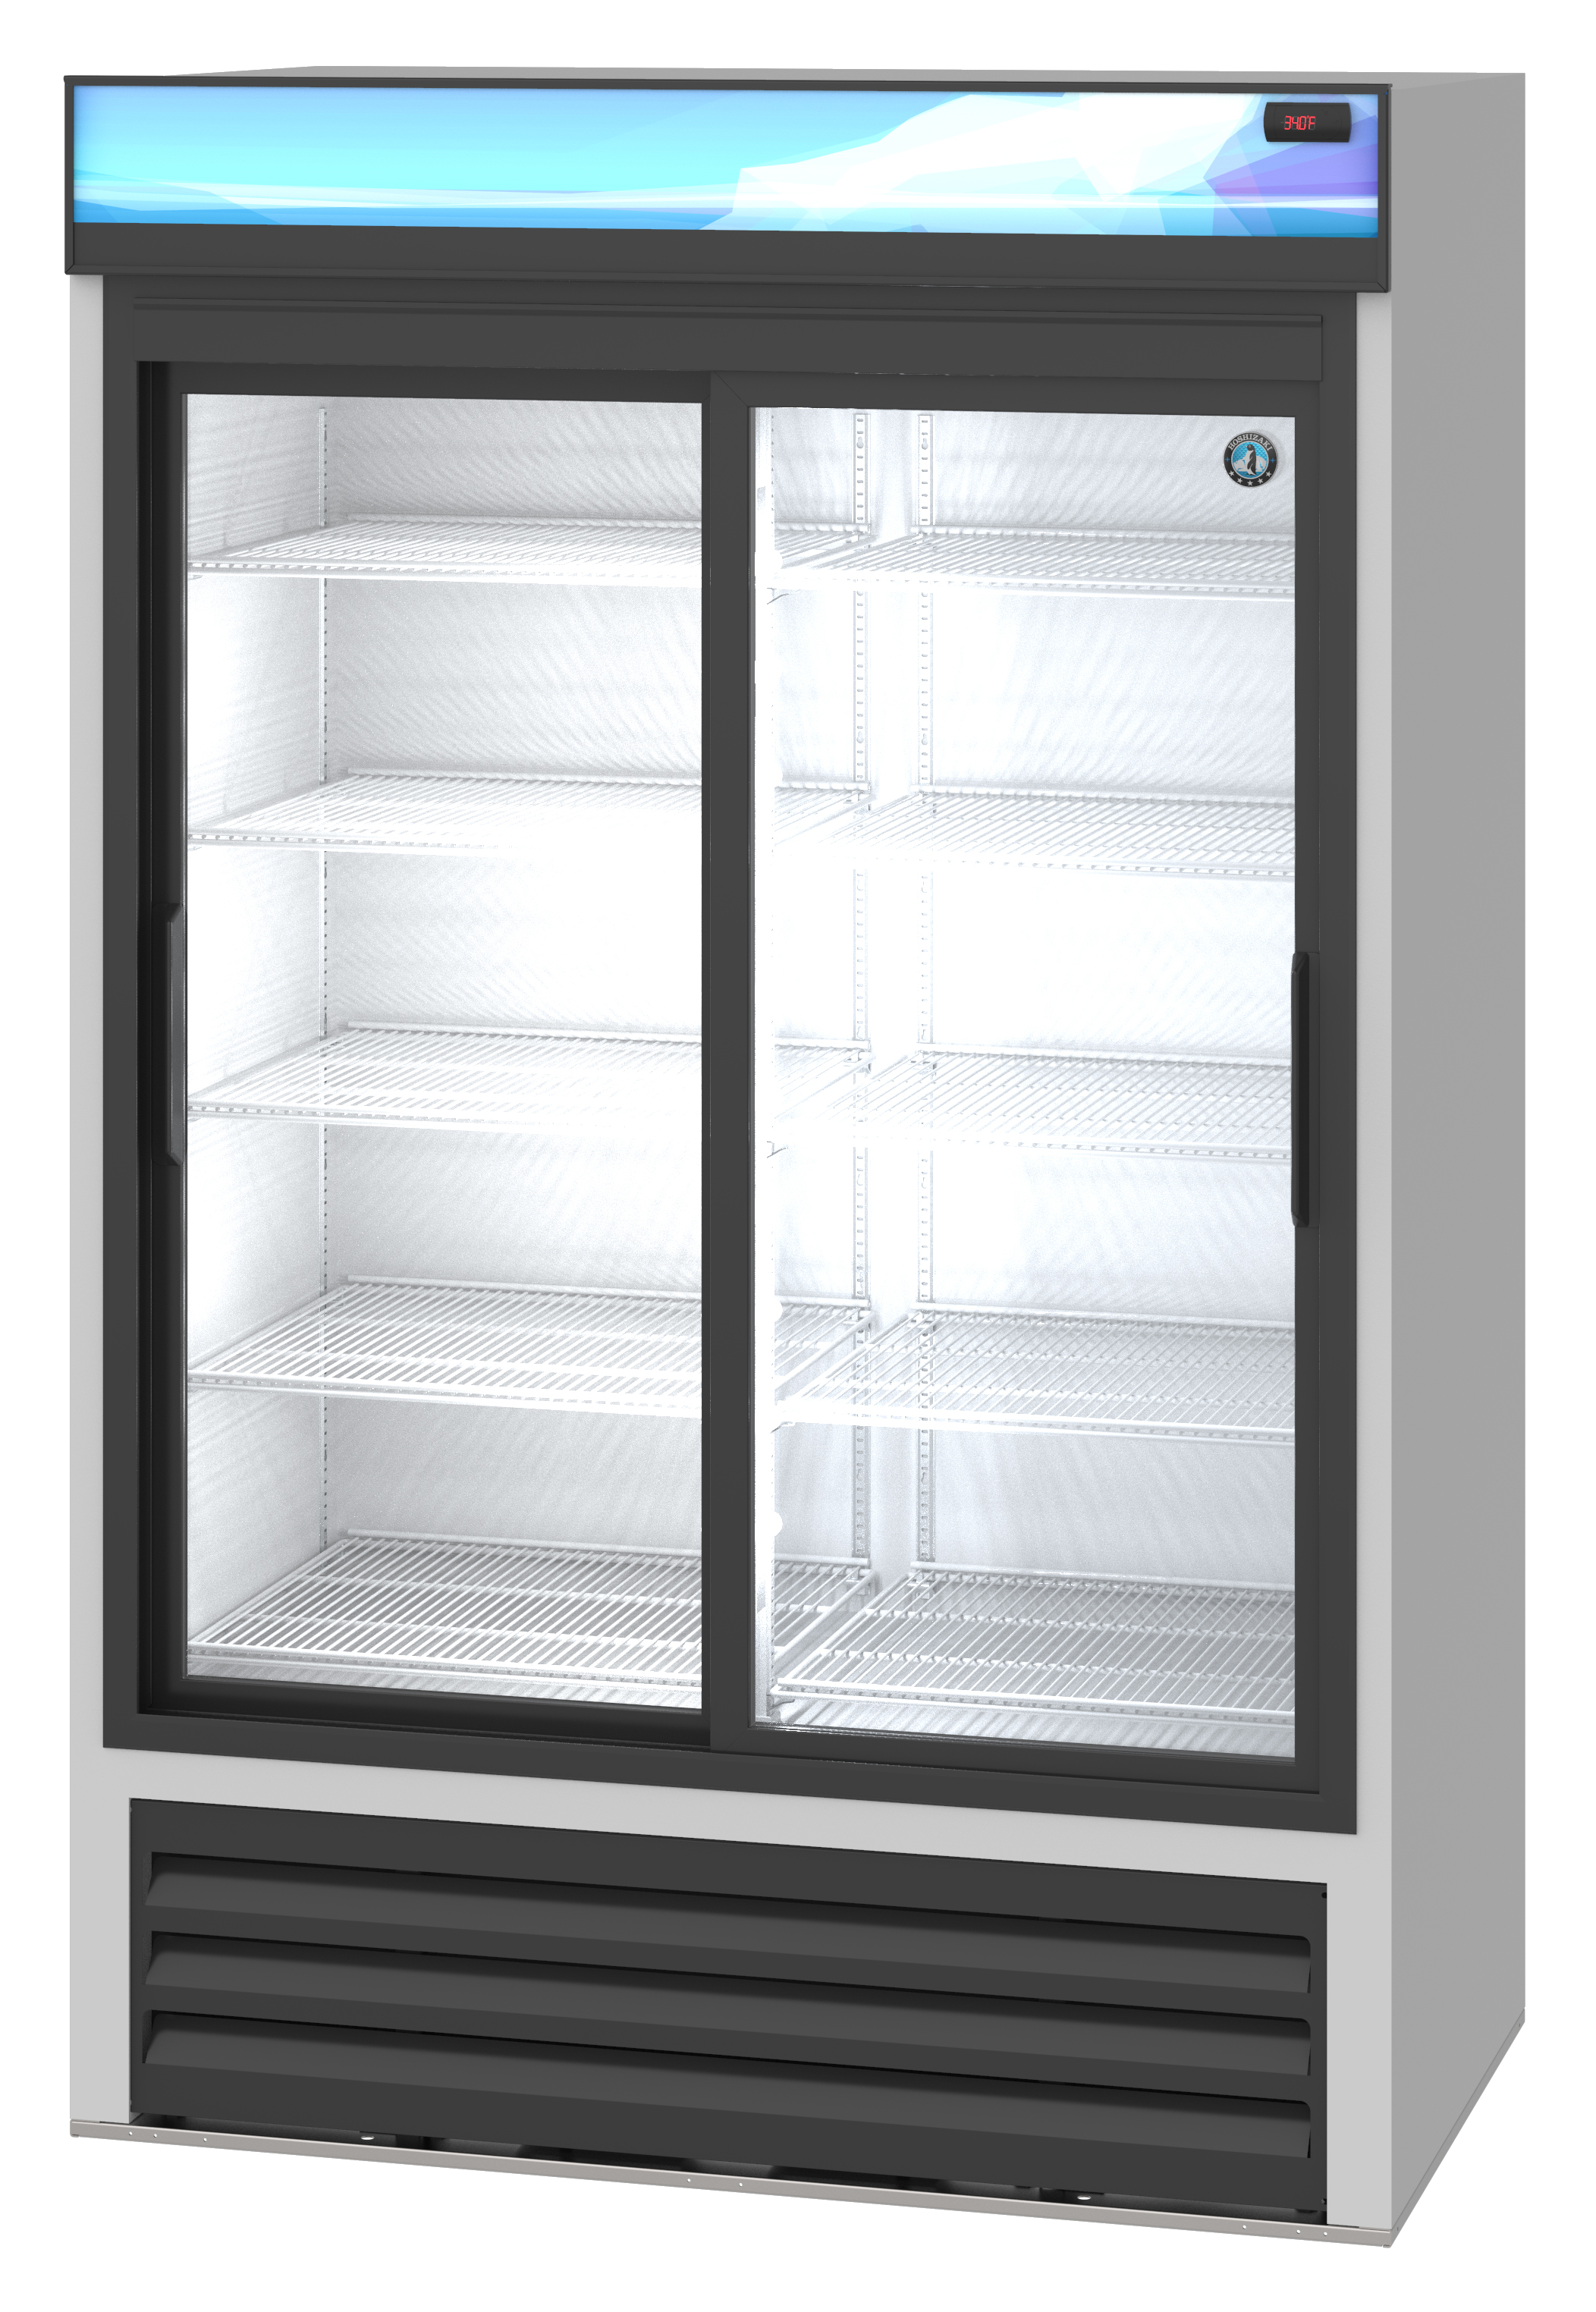 RM-45-SD, Refrigerator, Two Section Glass Door Merchandiser